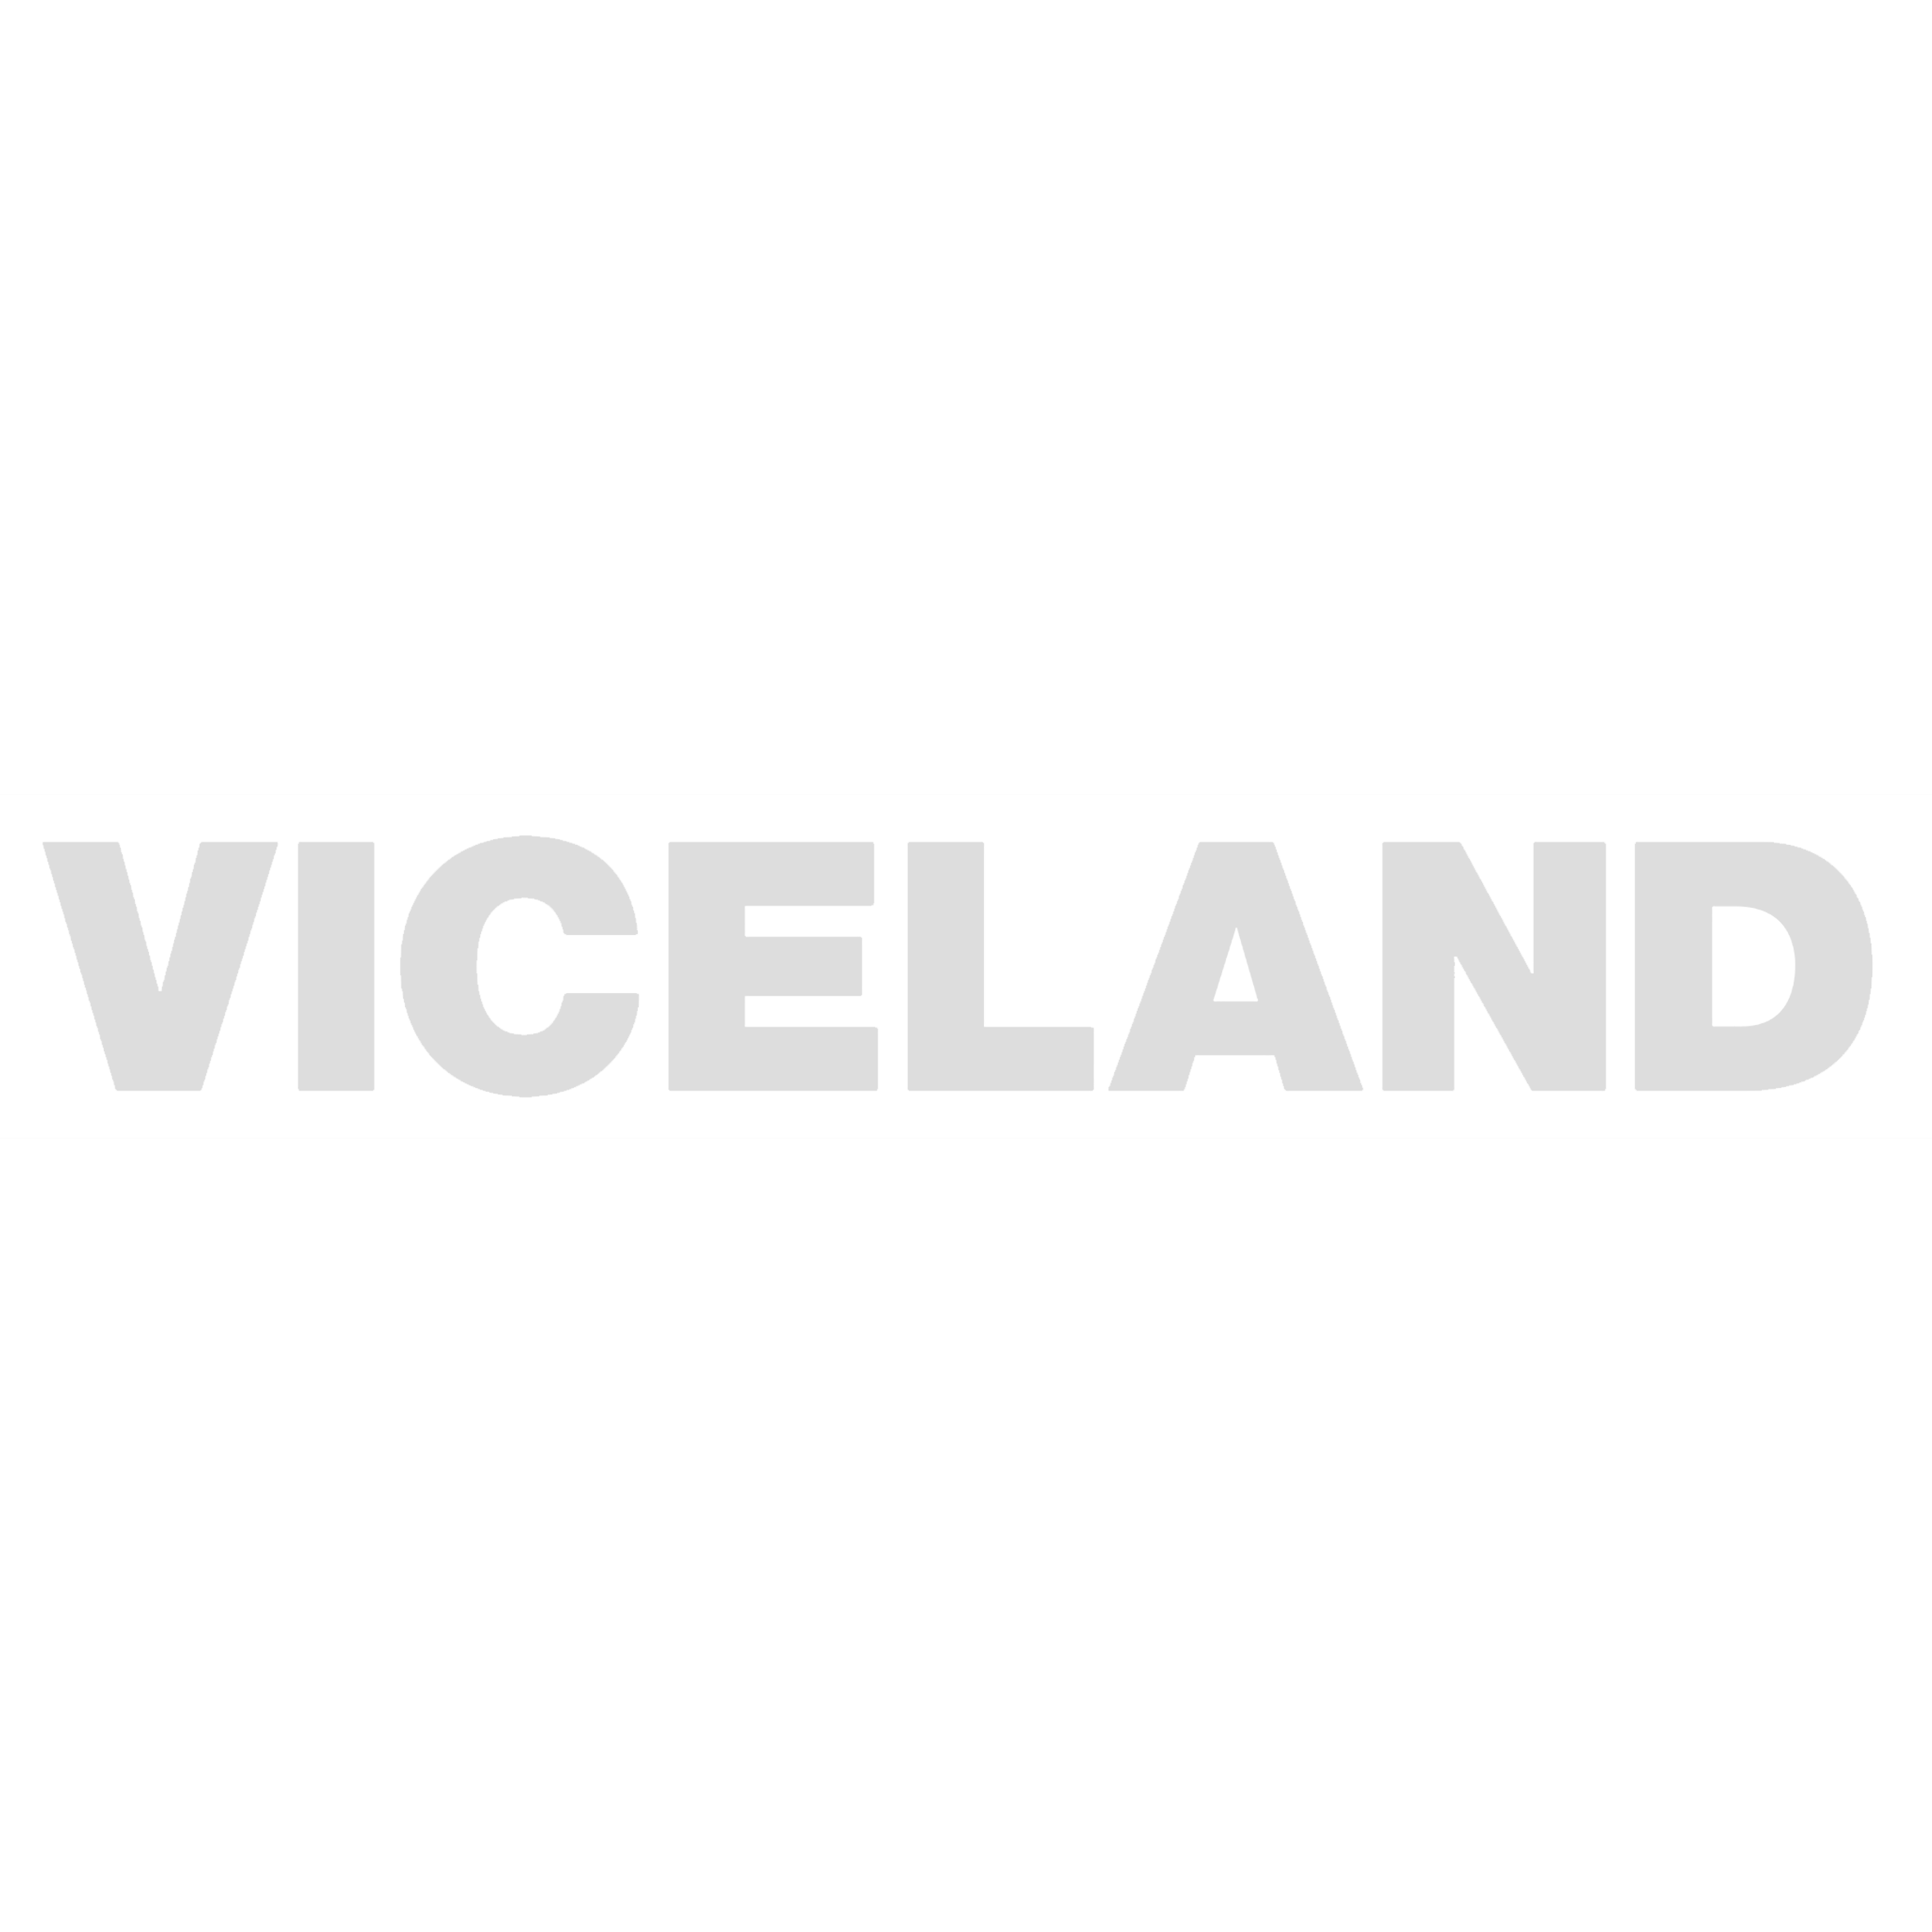 Viceland Logo - Viceland - MyTransfer